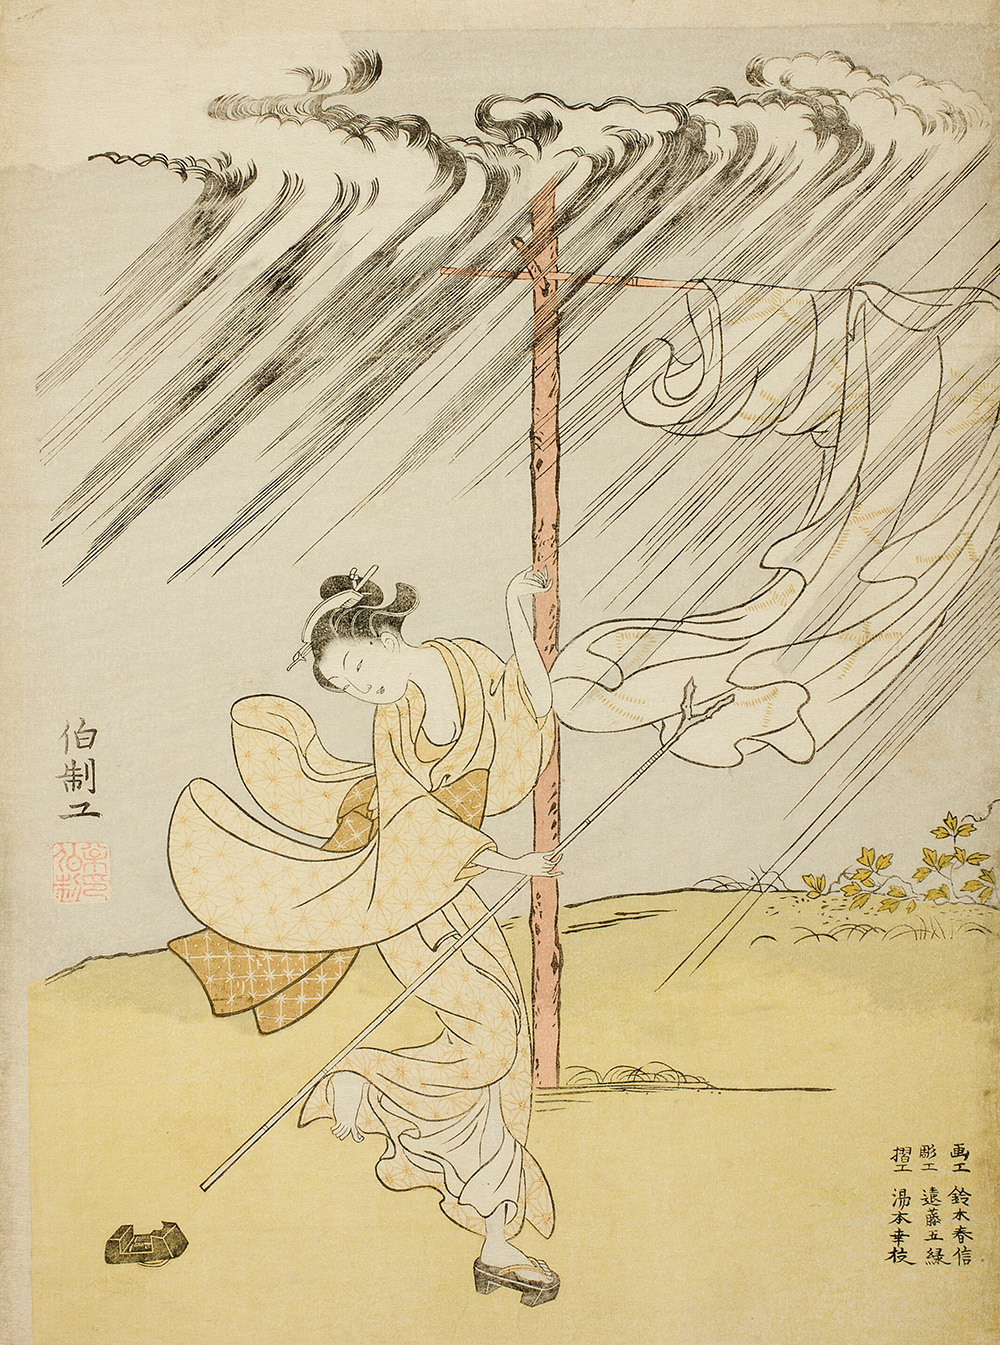 A Young Woman in a Summer Shower, by Suzuki Harunobu, 1765.